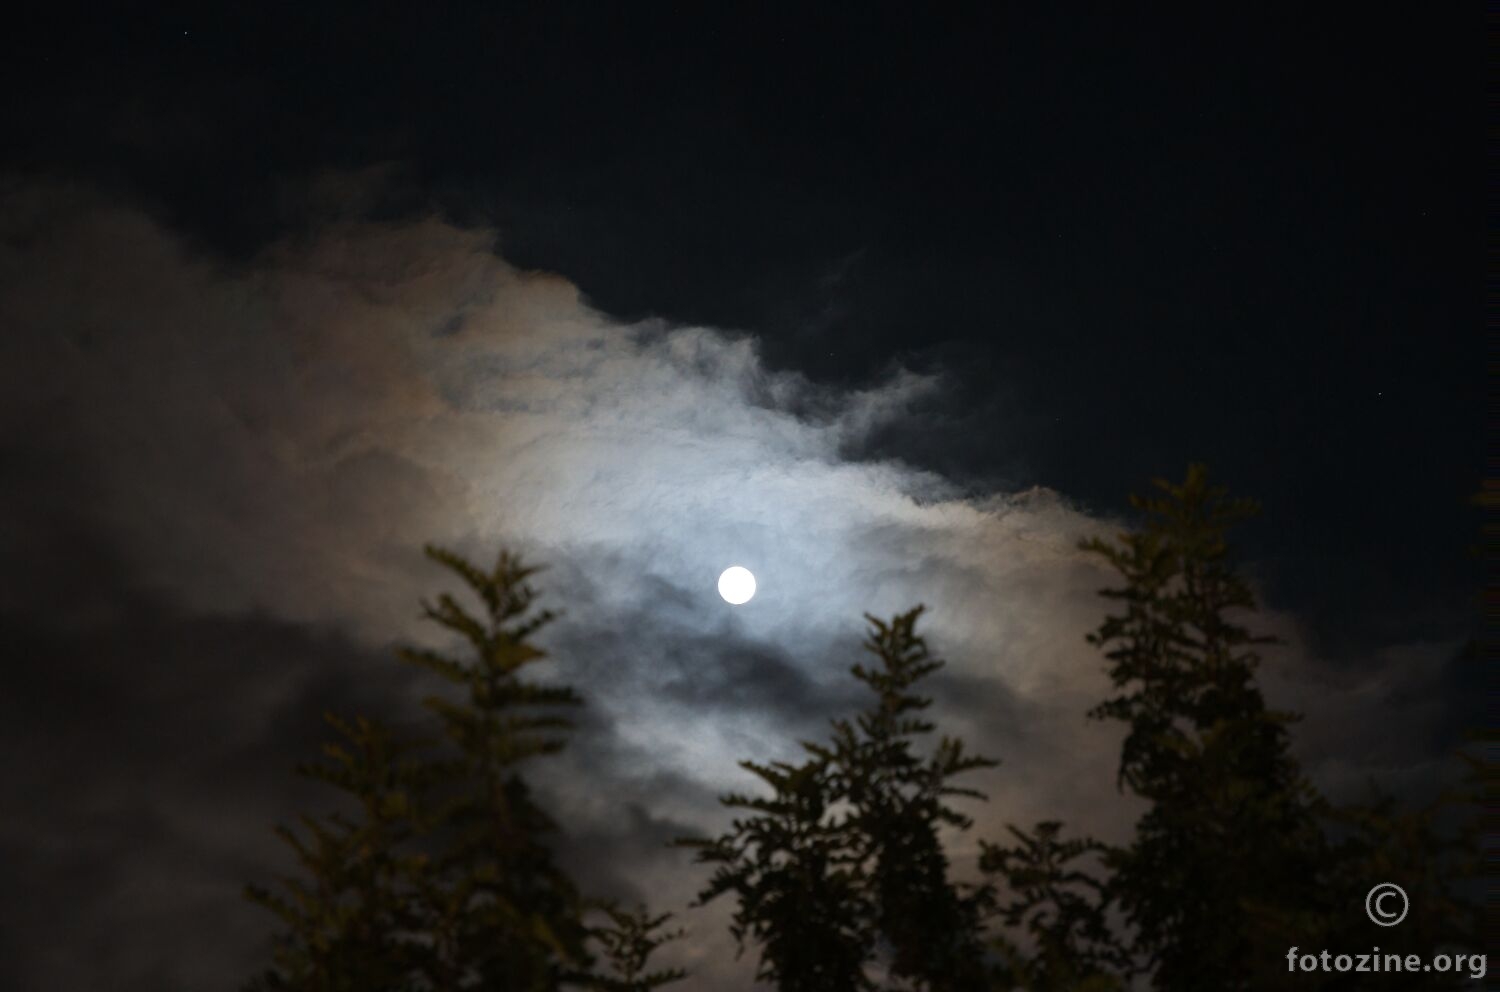 Mjesec iznad oblaka